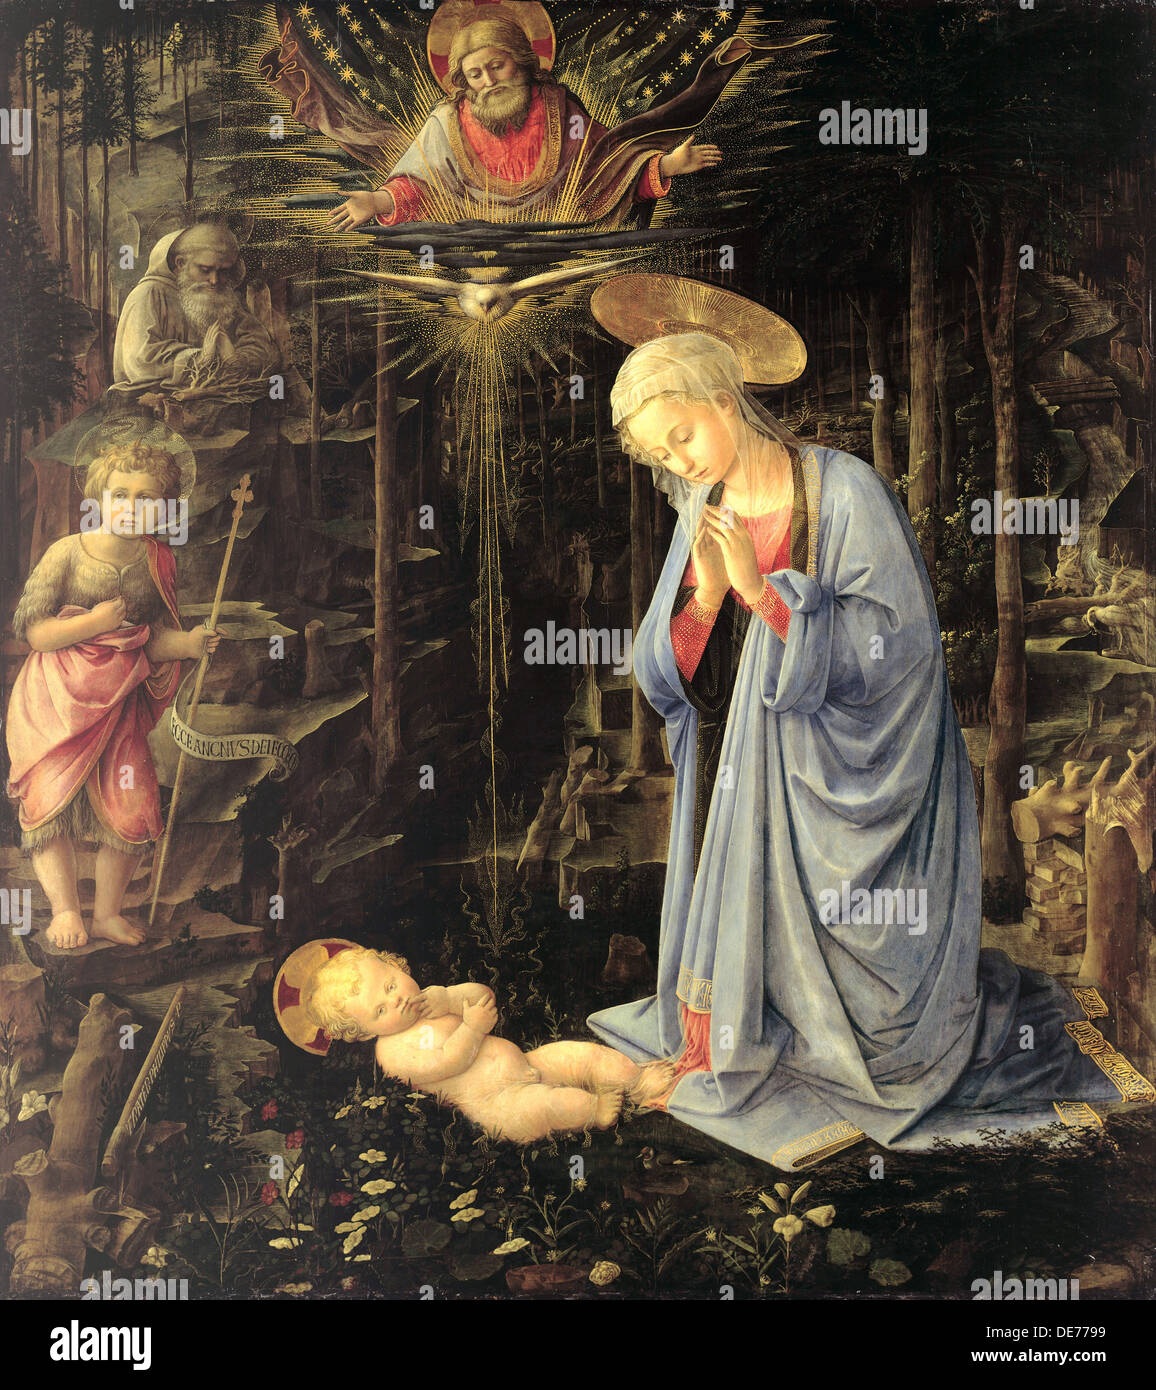 The Adoration in the Forest, 1459. Artist: Lippi, Fra Filippo (1406-1469) Stock Photo